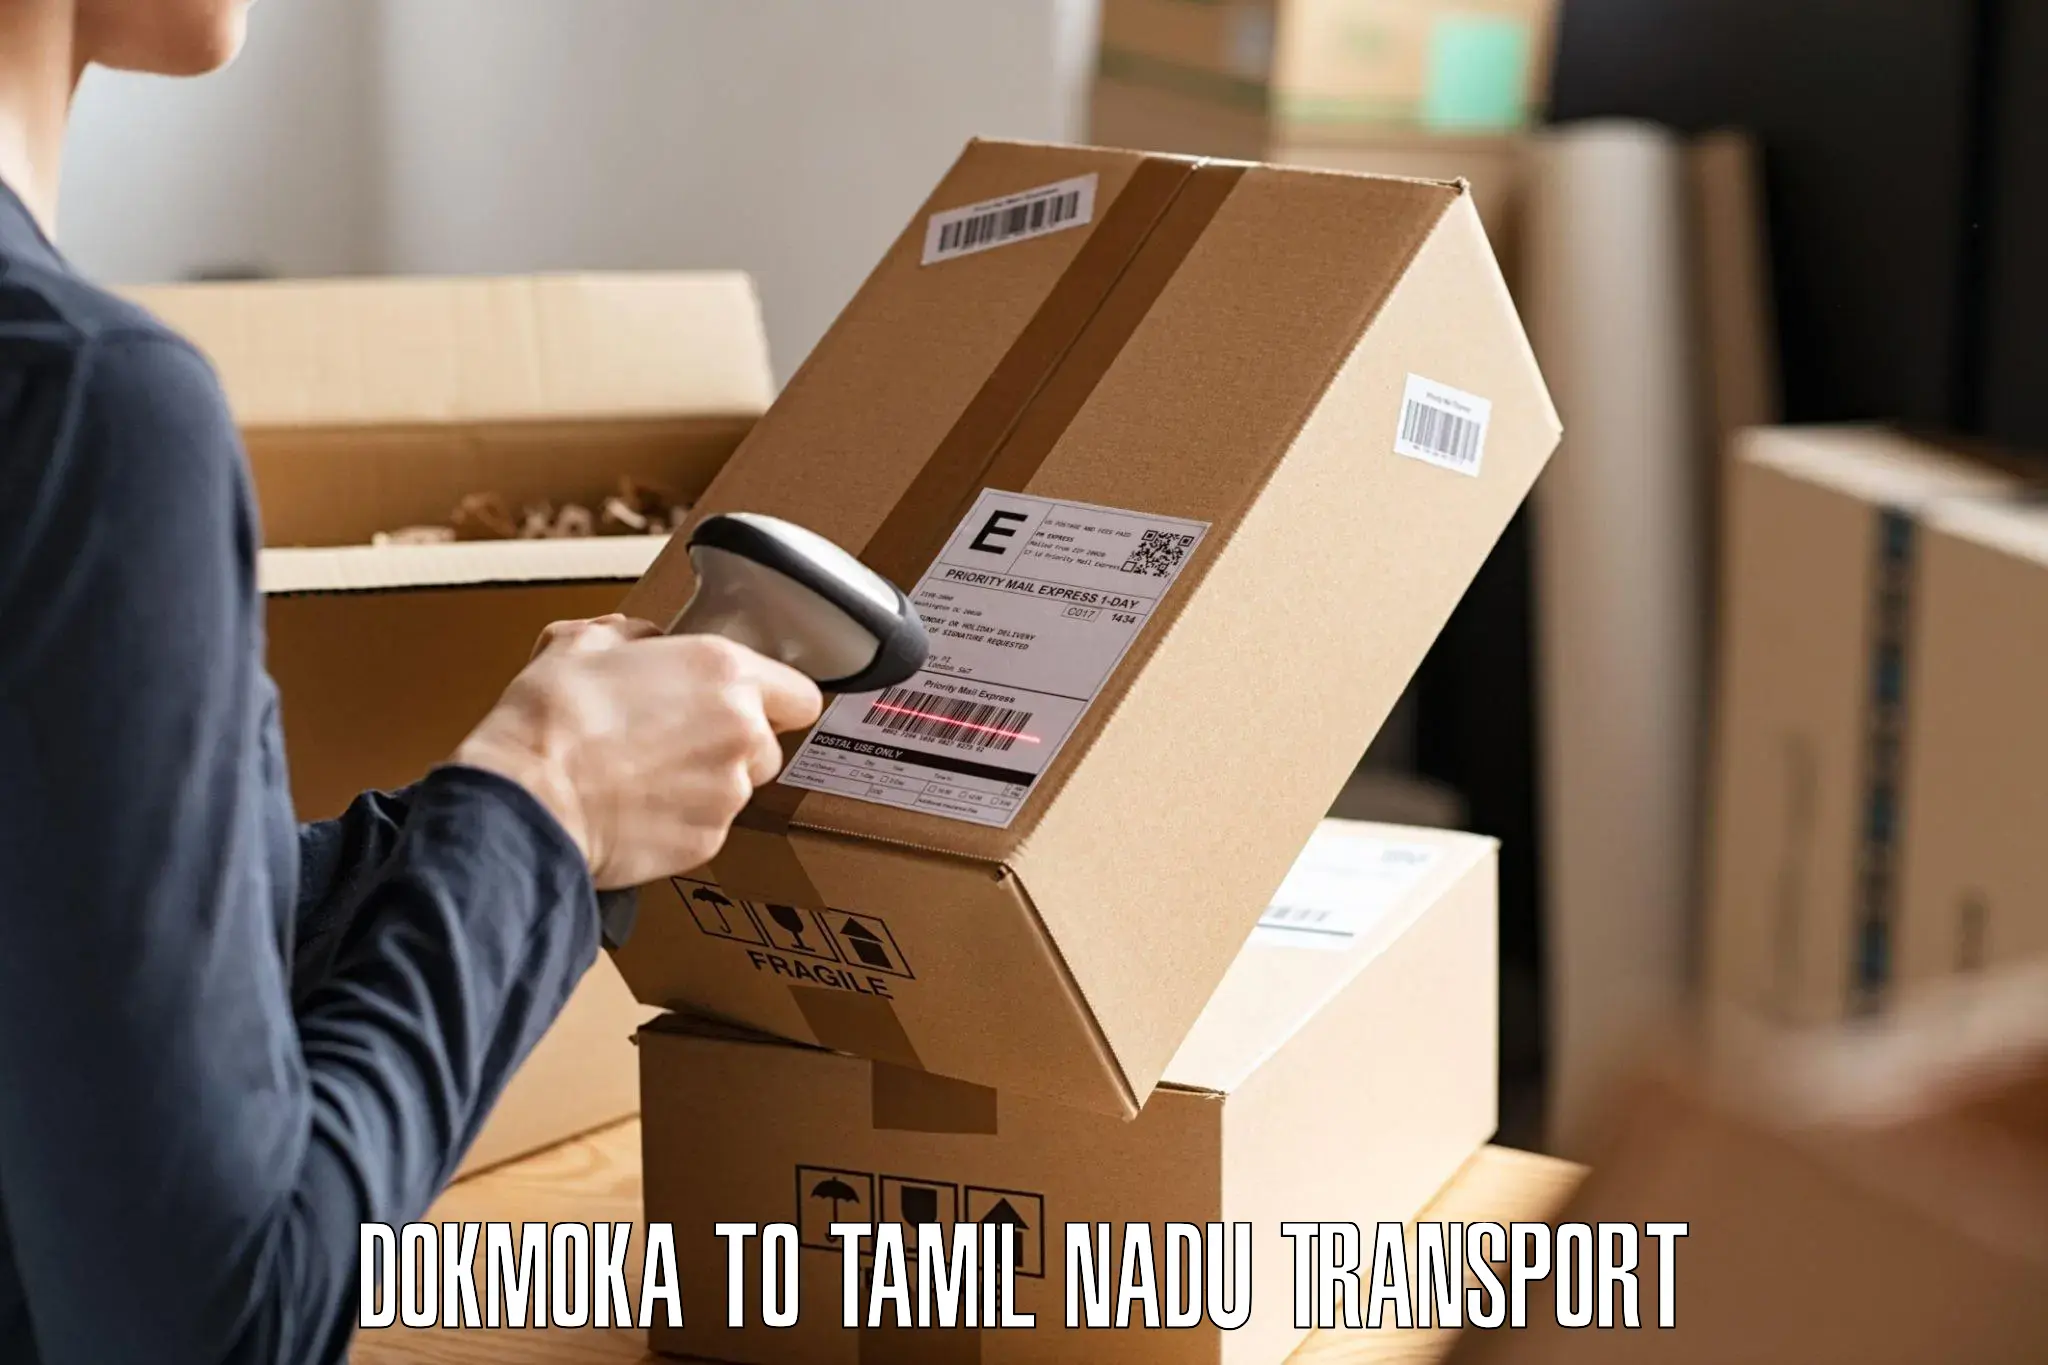 Goods delivery service Dokmoka to Chennai Port